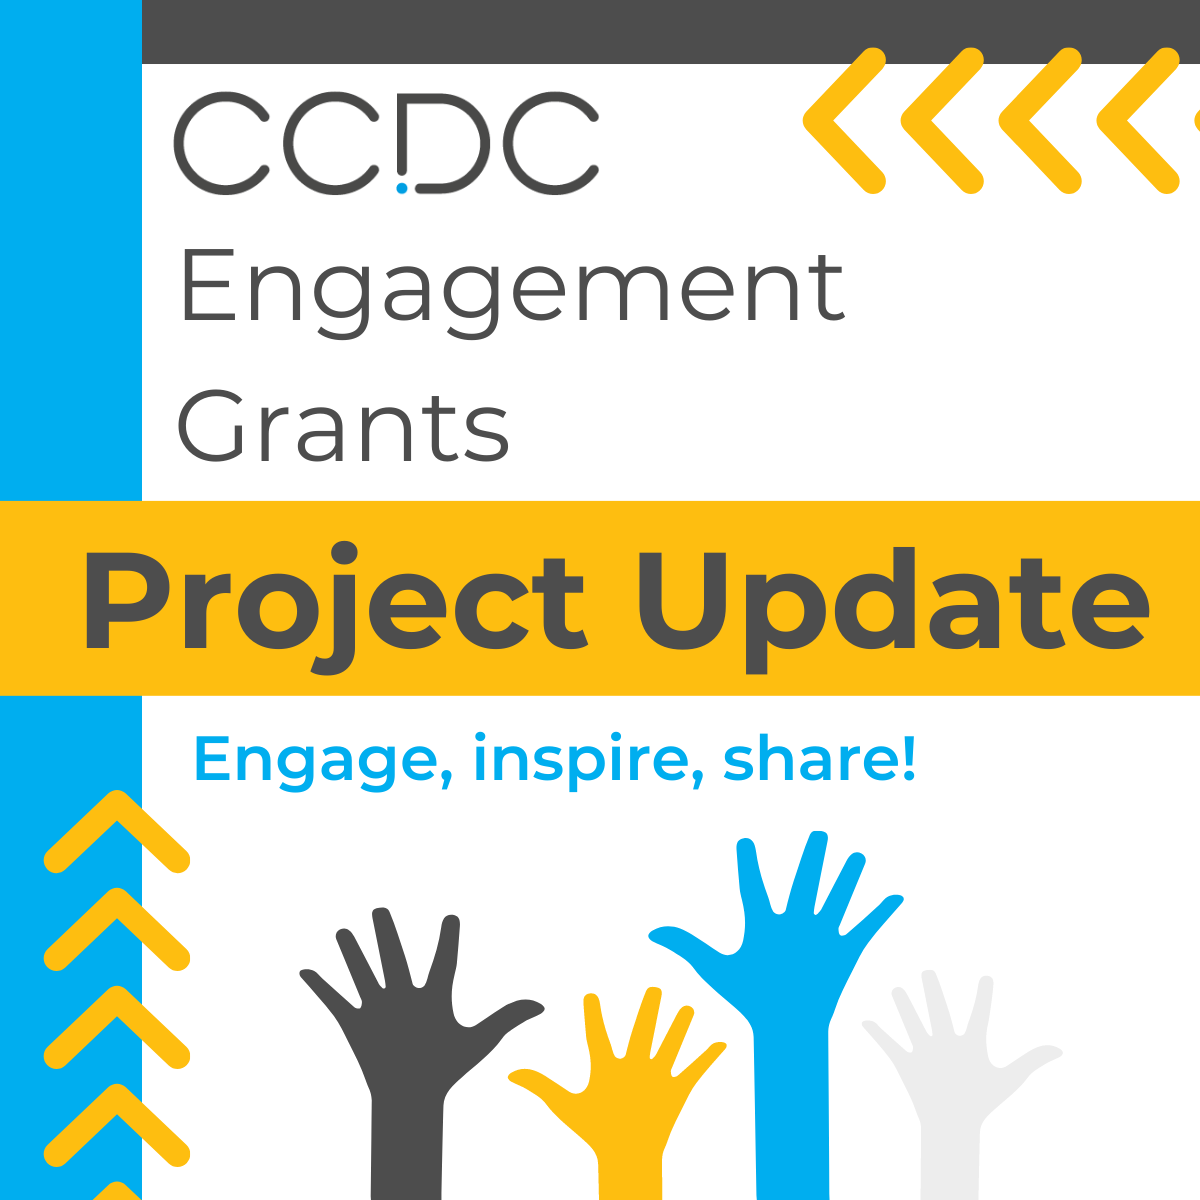 CCDC Engagement Grants project updates